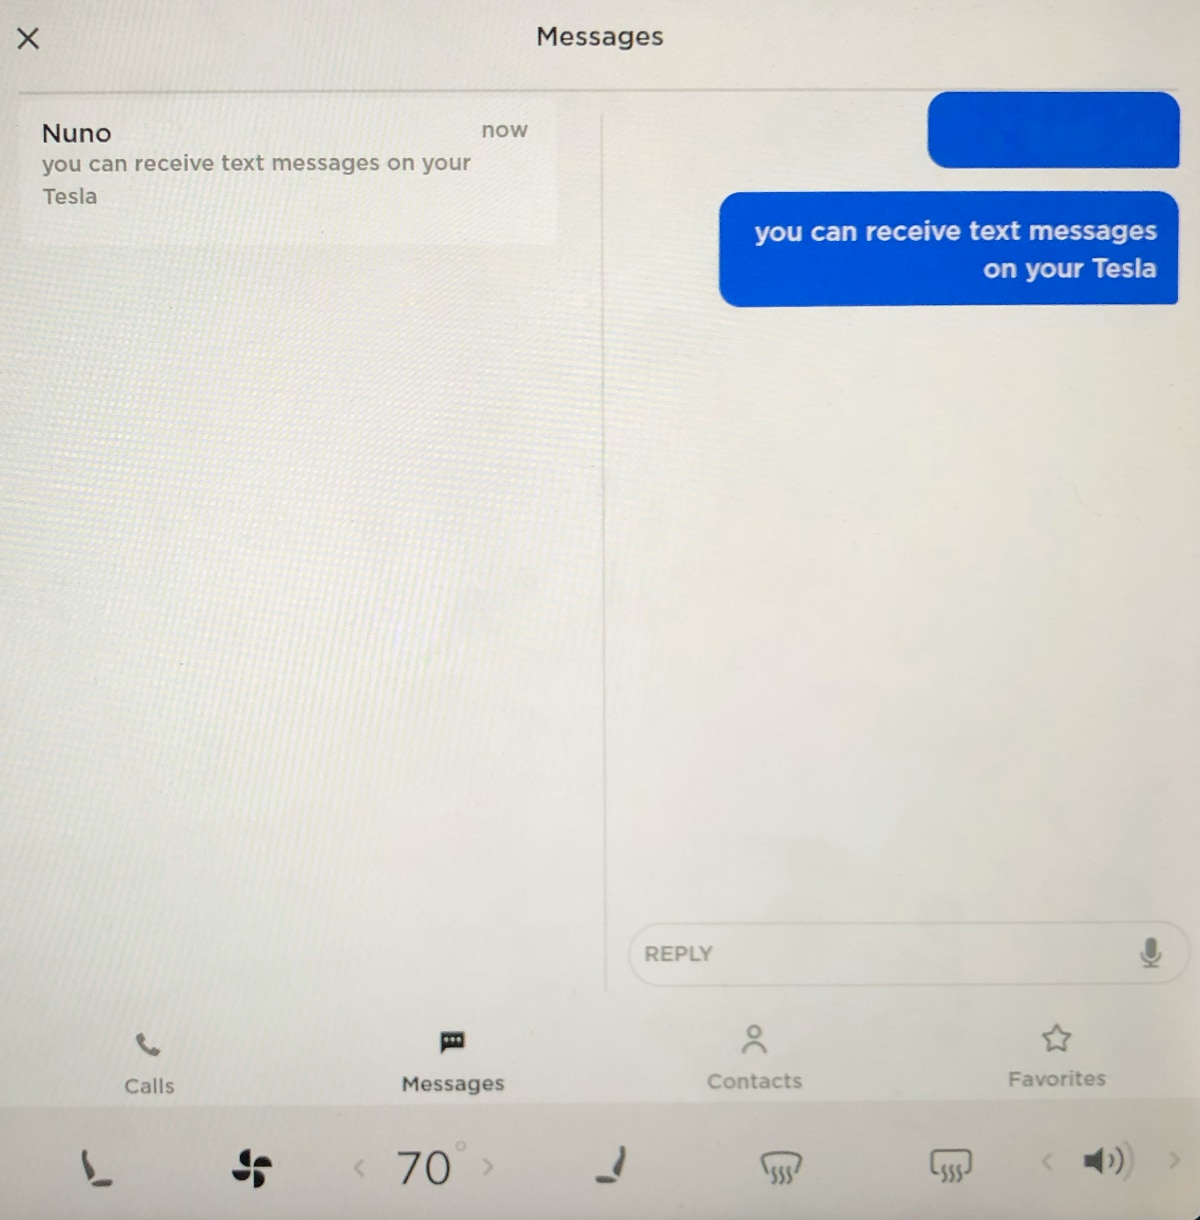 Updated Tesla phone messages UI